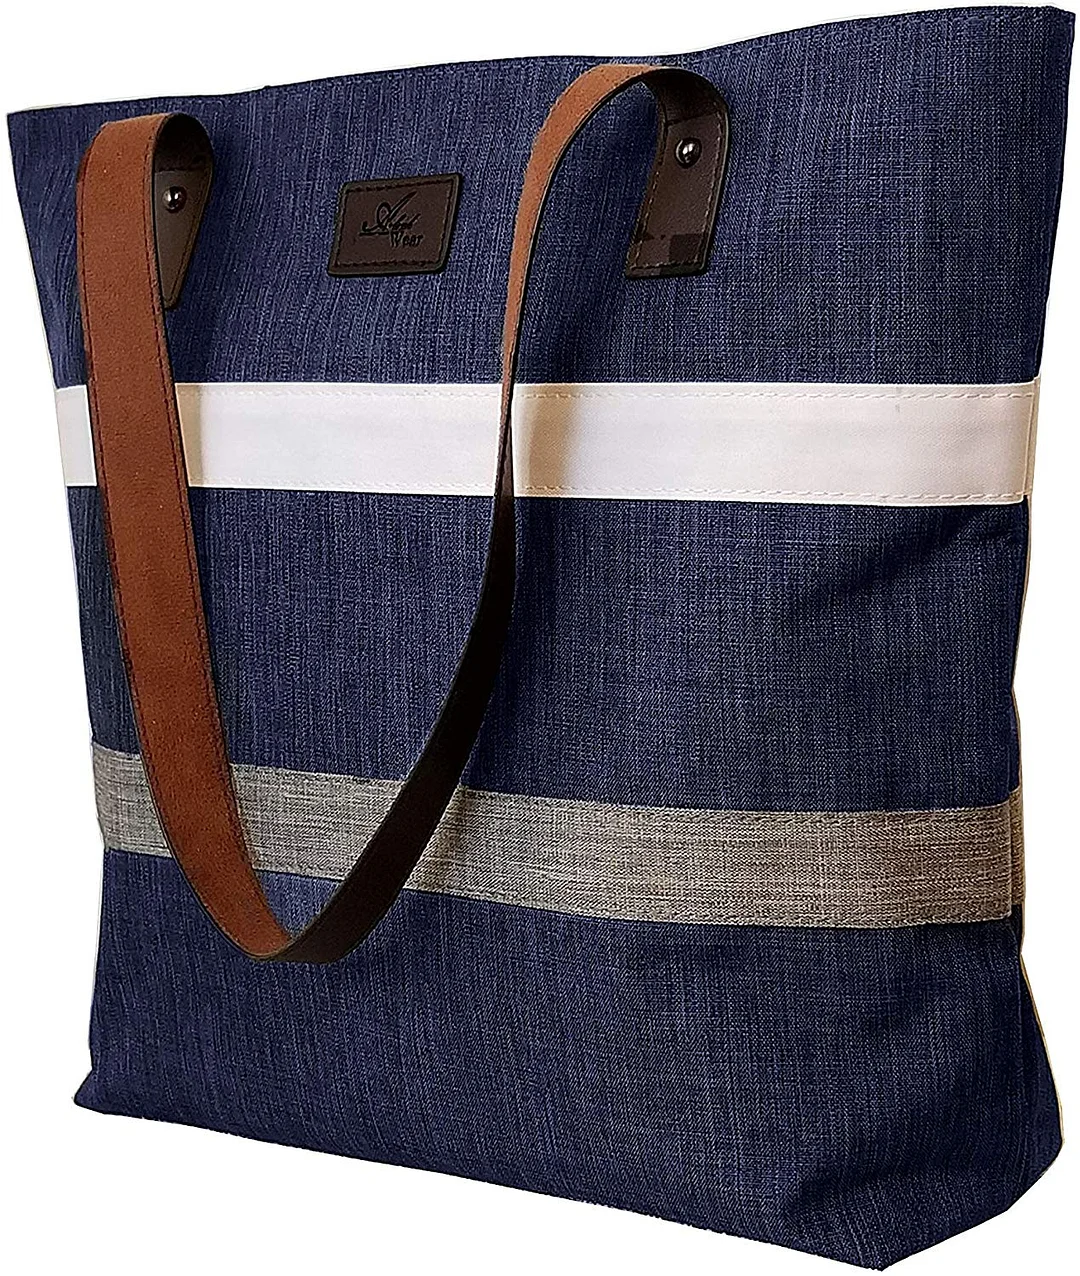 Wear Shoulder Tote Bag Purse Handbag For Women | For Work School Travel Business Shopping